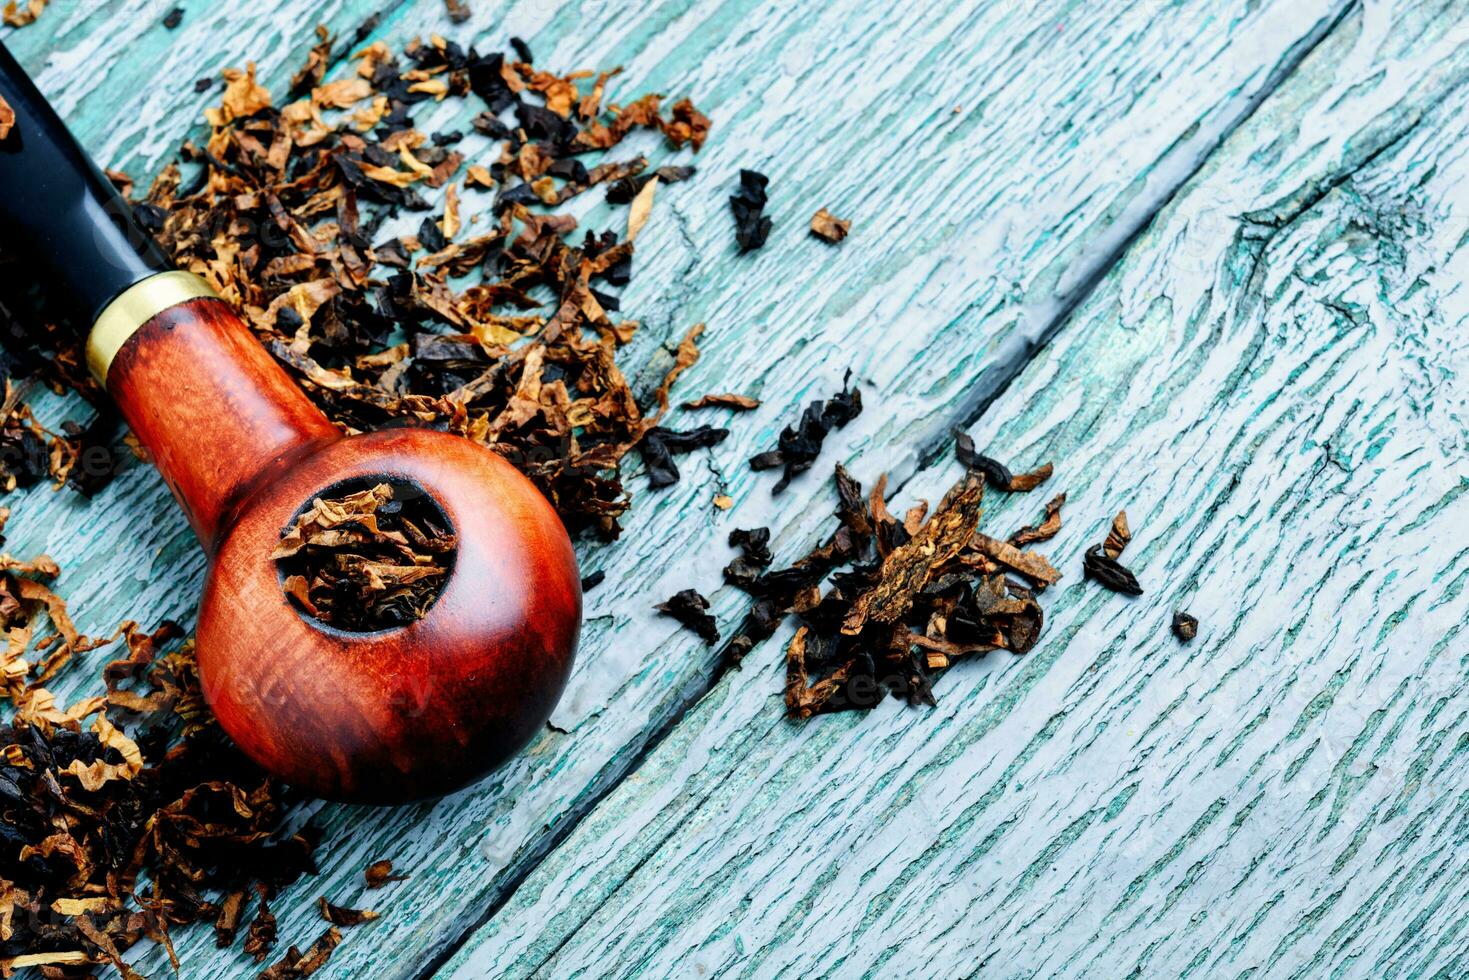 Smoker tobacco pipe photo